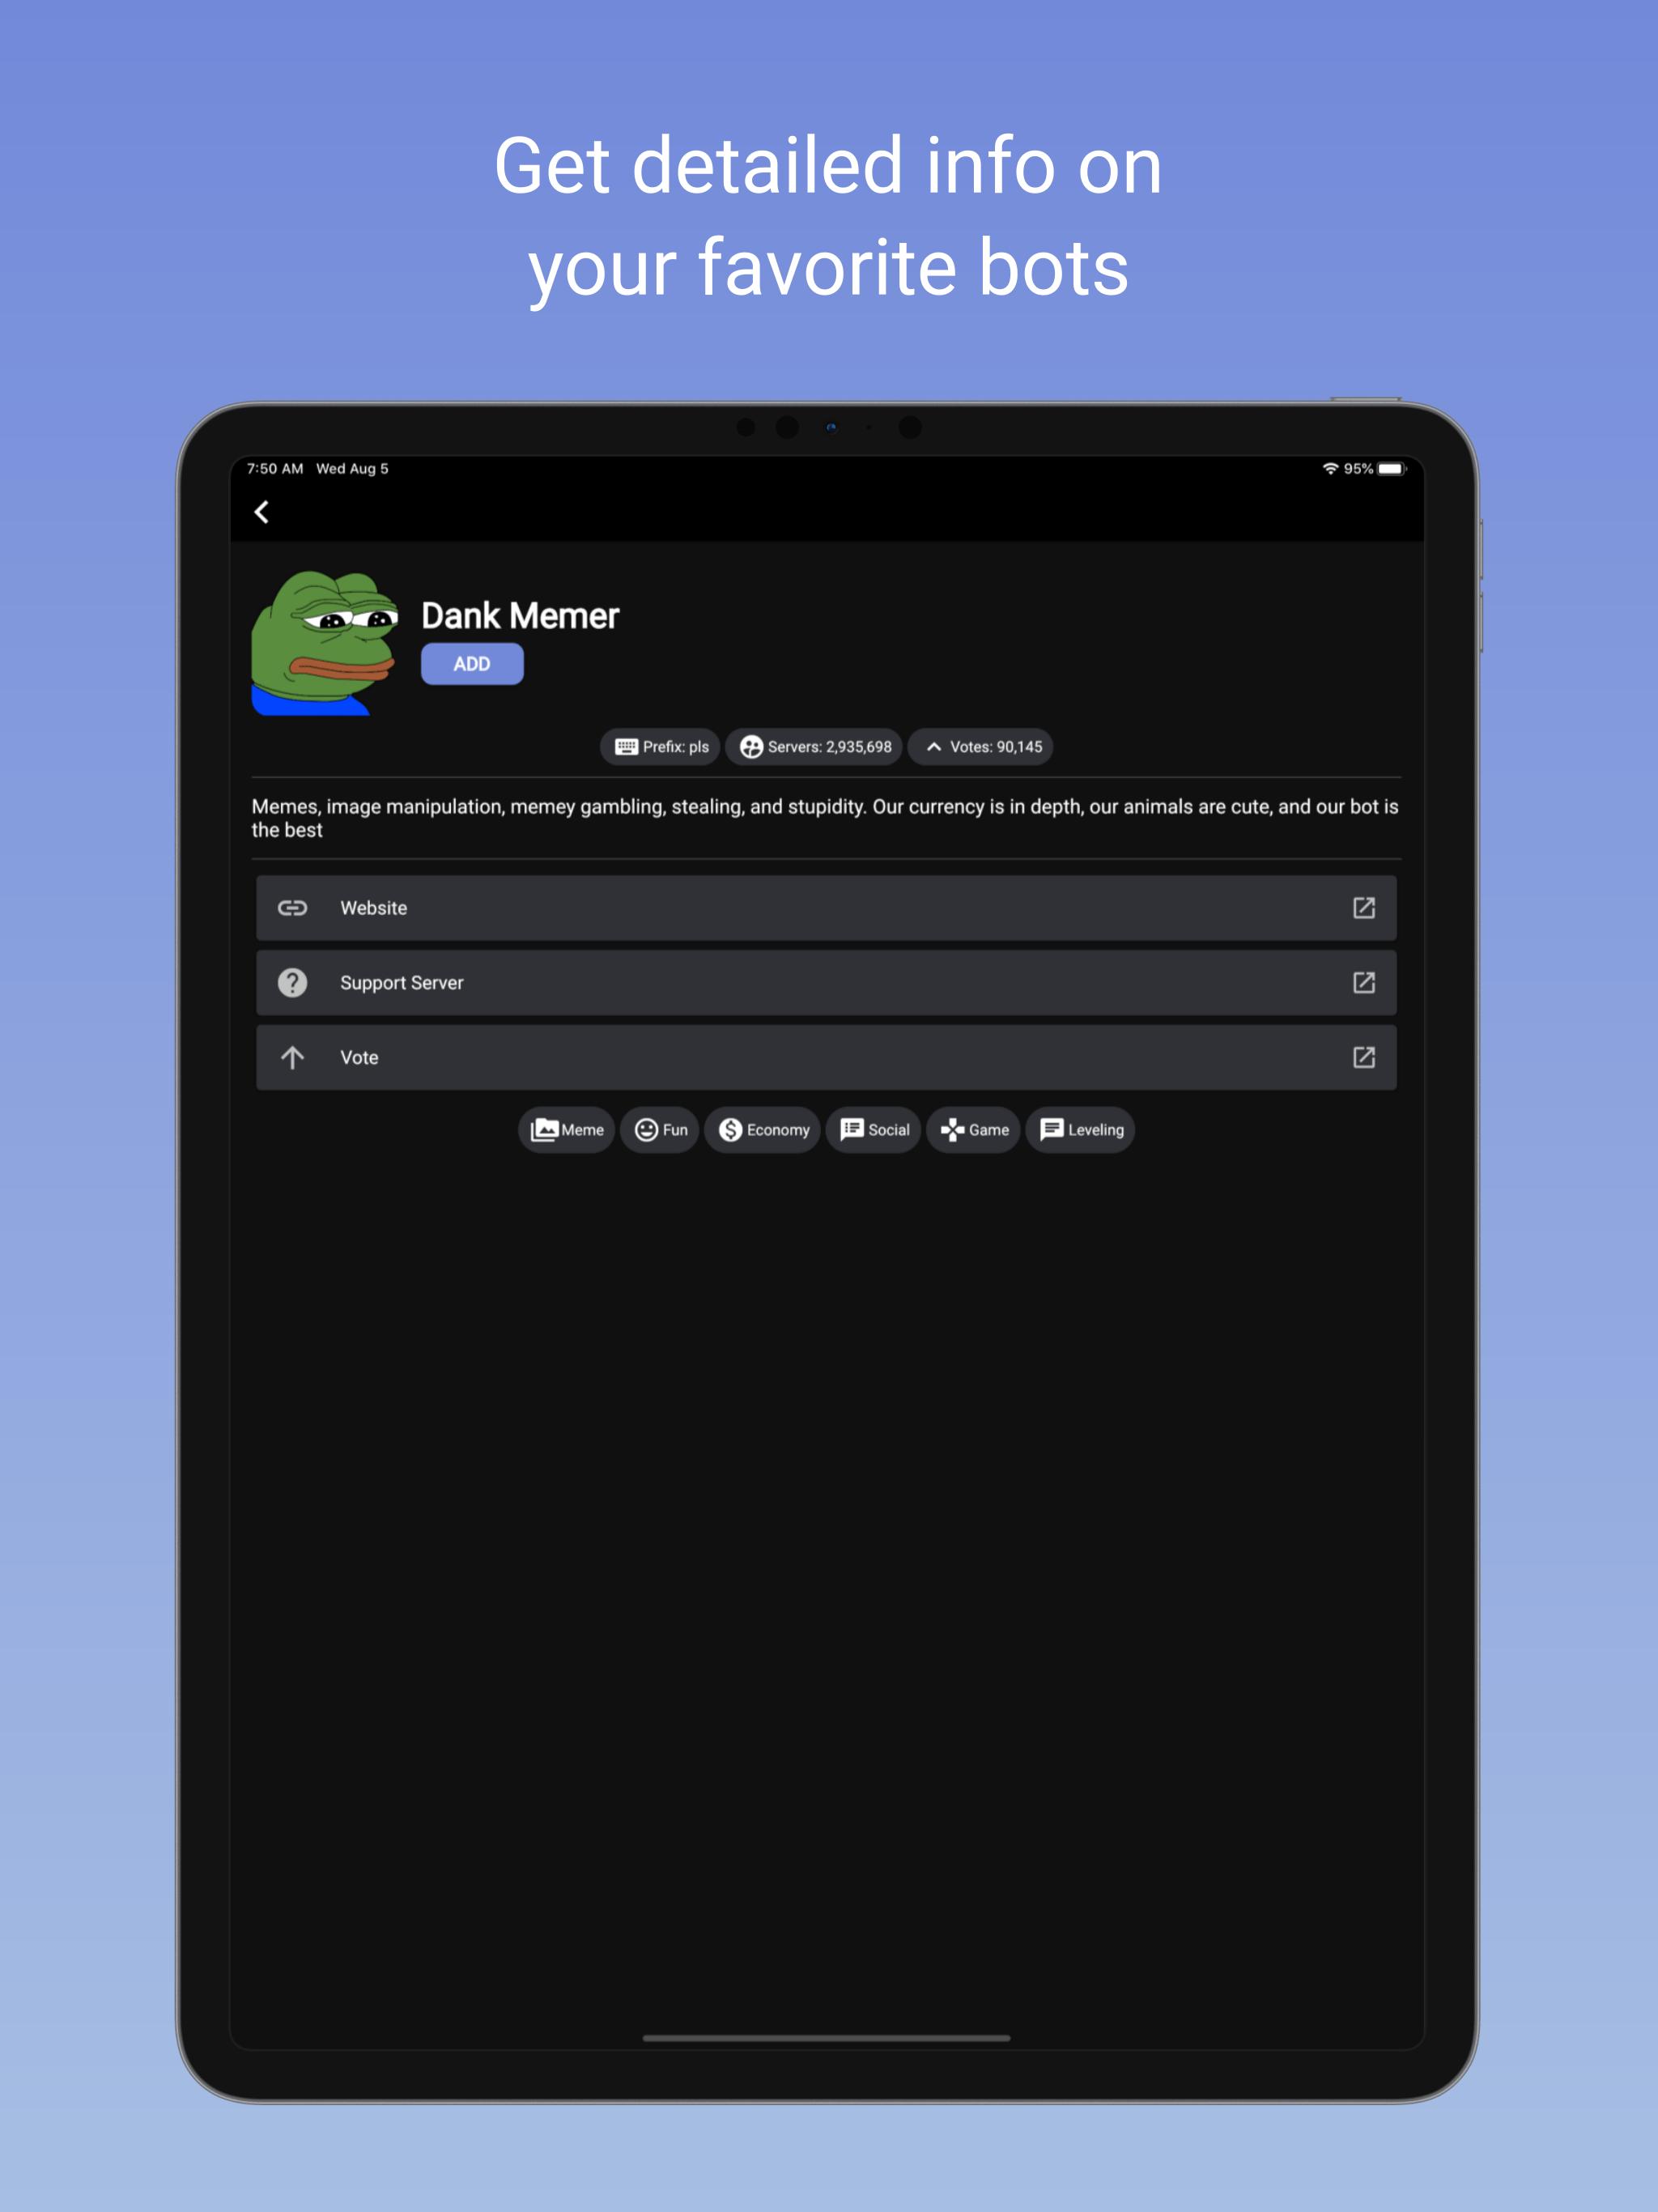 Discord Bots For Android Apk Download - 100 free roblox accounts discord bots dank memer